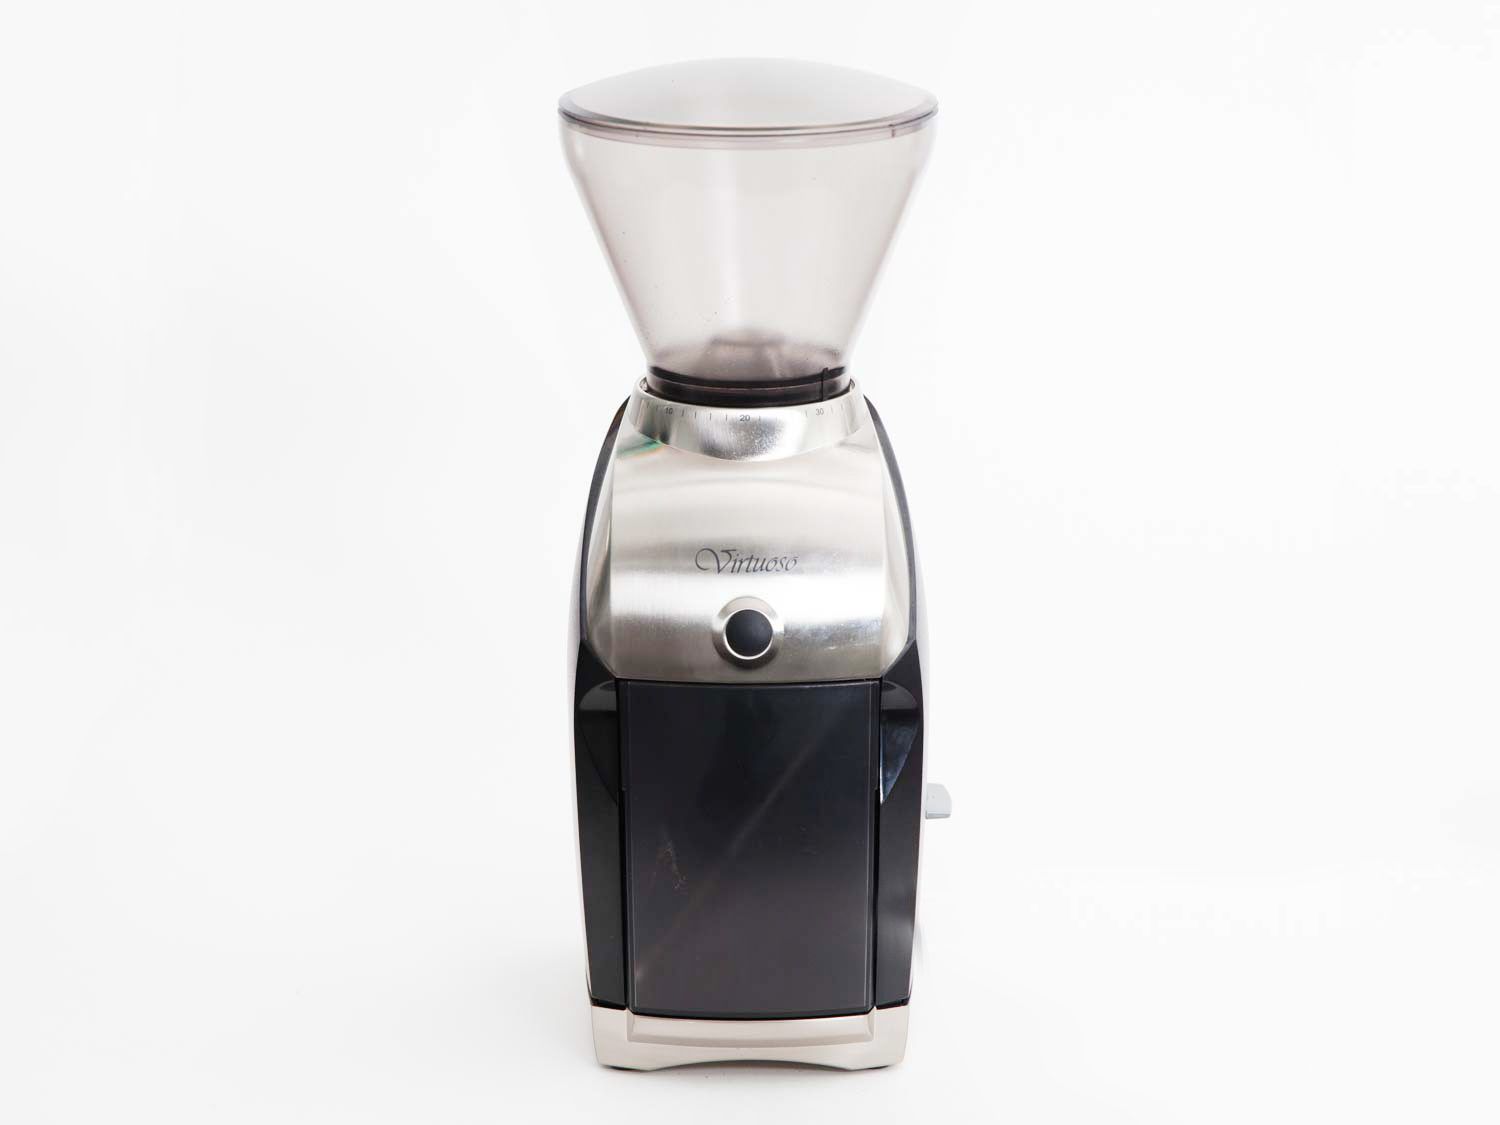 The Baratza Virtuoso coffee grinder